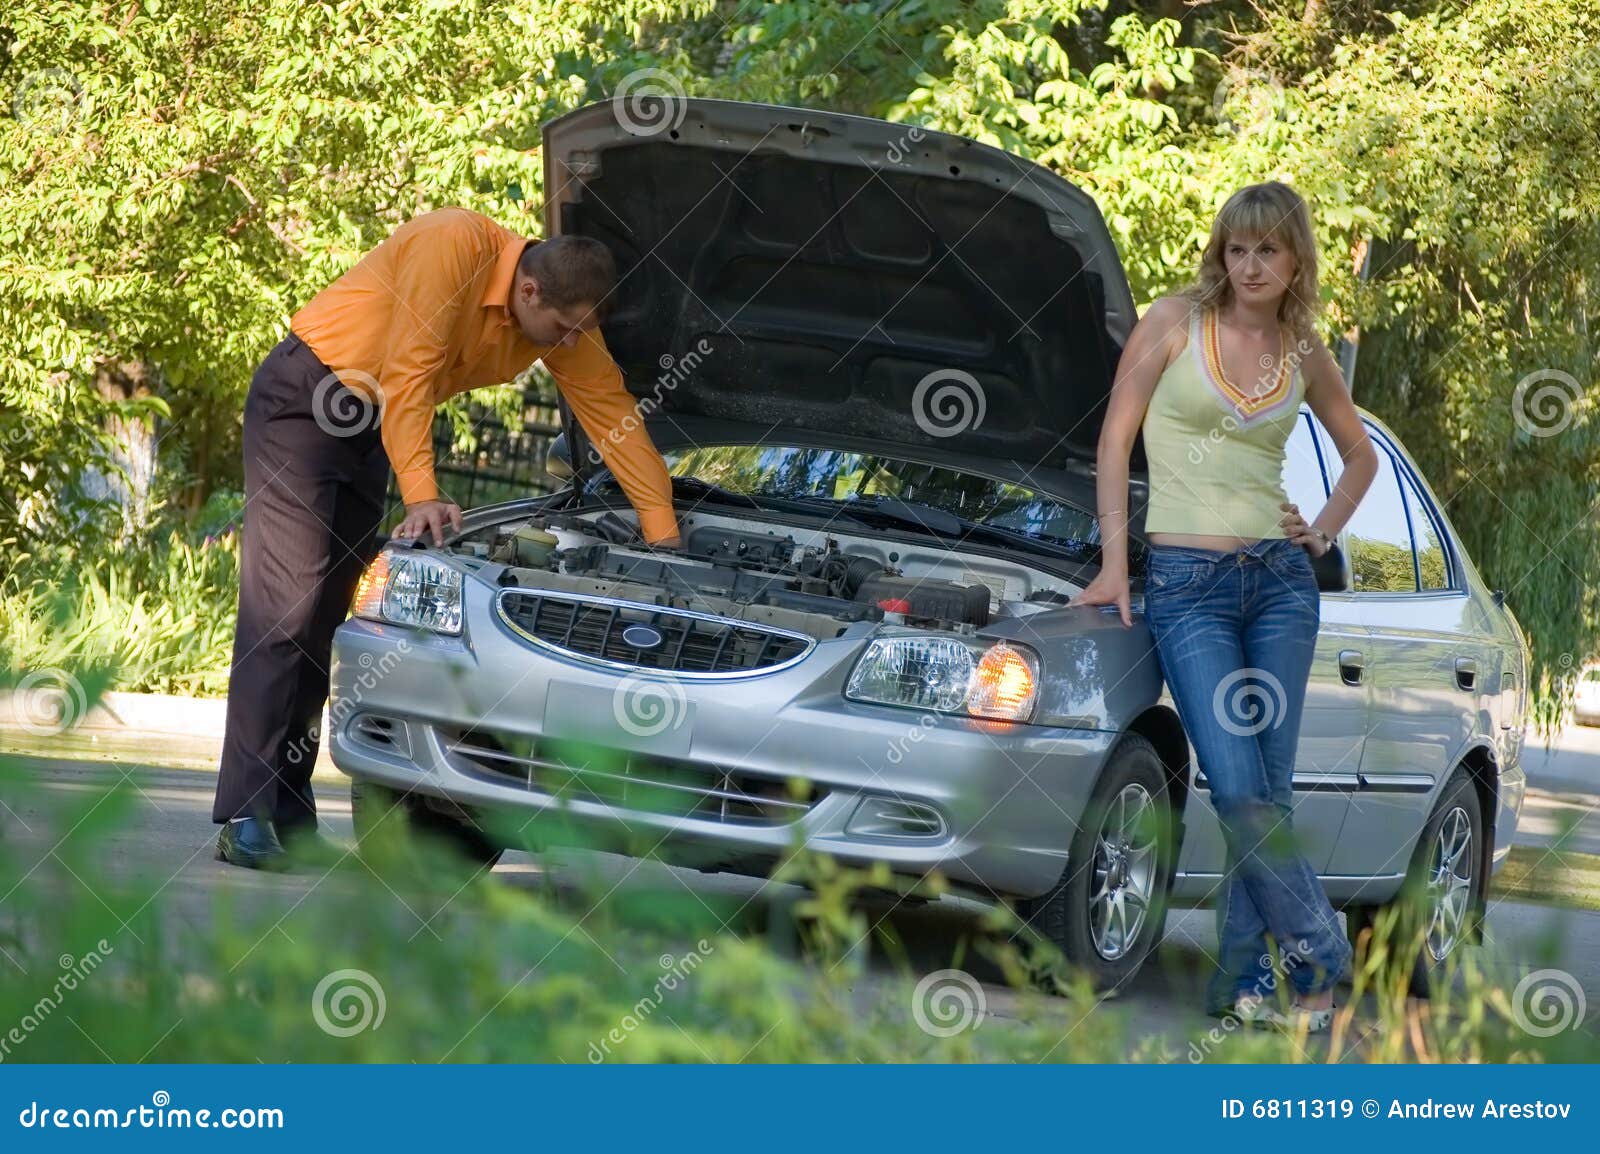 Мужчины машина и жена. Девушка и мужчина чинят машину. Мужчина чинит автомобиль женщине. Мужчина ремонтирует машину. Женщина помогает отремонтировать автомобиль.